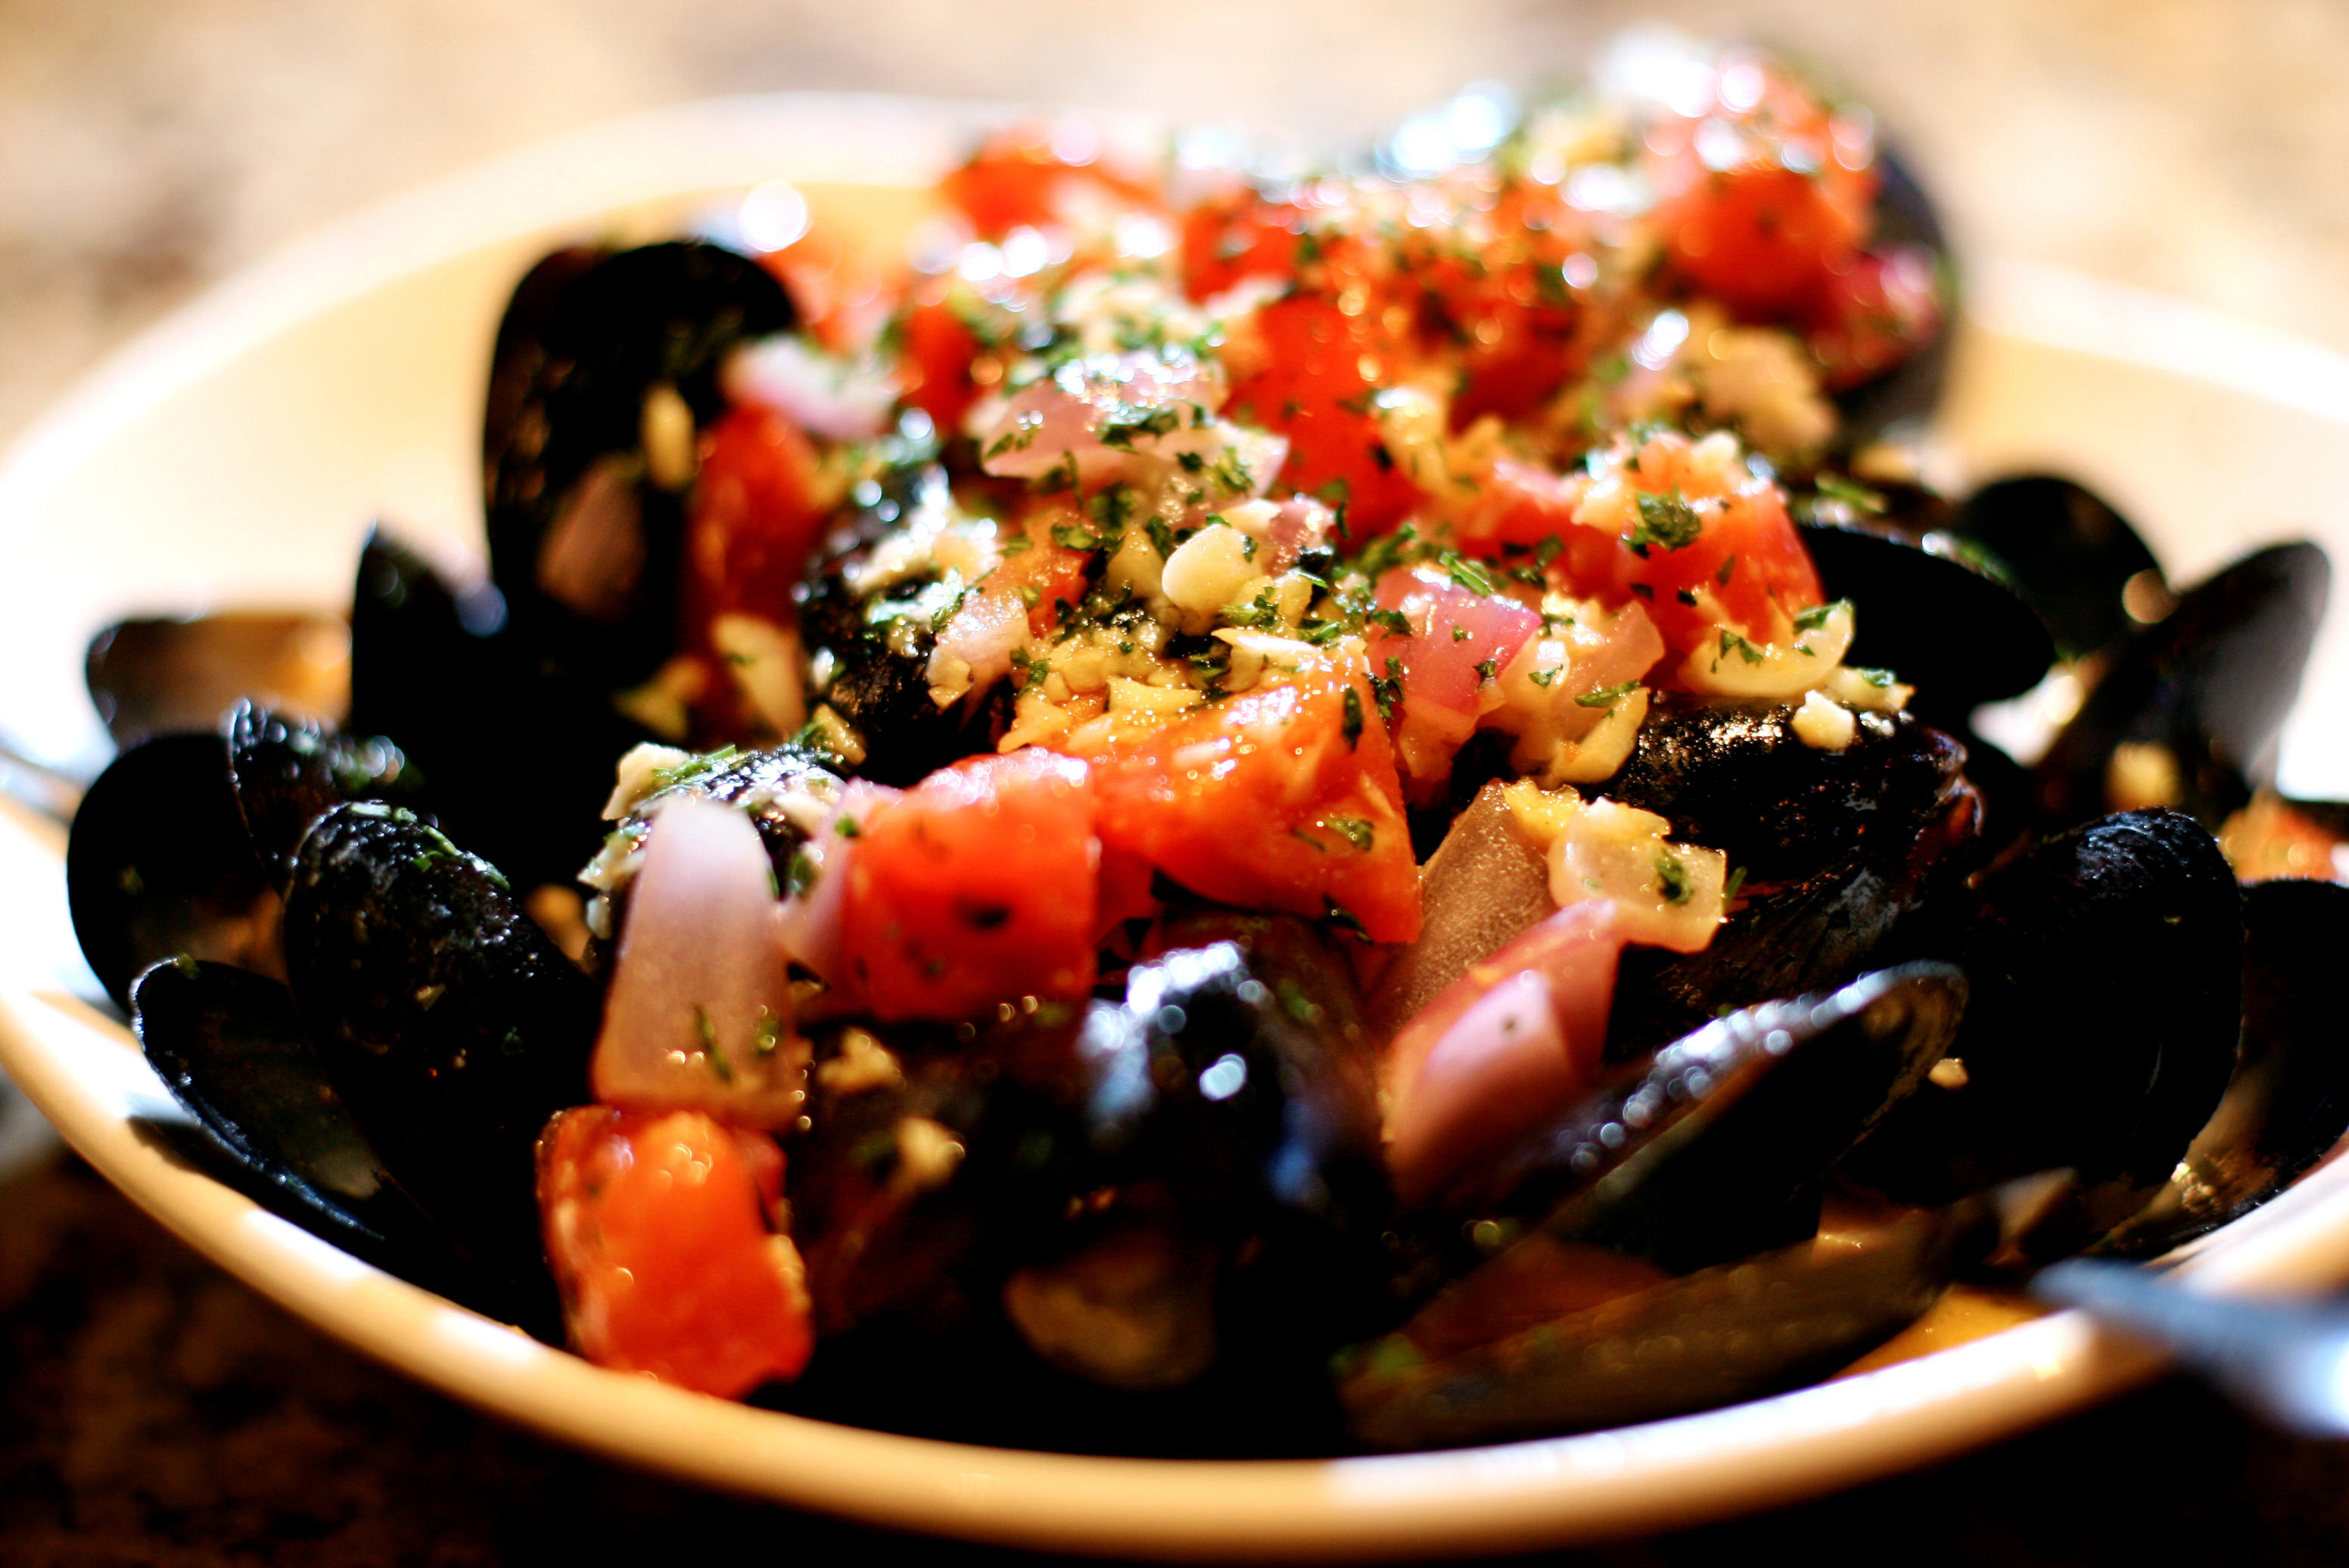 Mussels Josephine; tomatoes, garlic, basil - lemon wine sauce at Bonefish Grill in Boynton Beach.